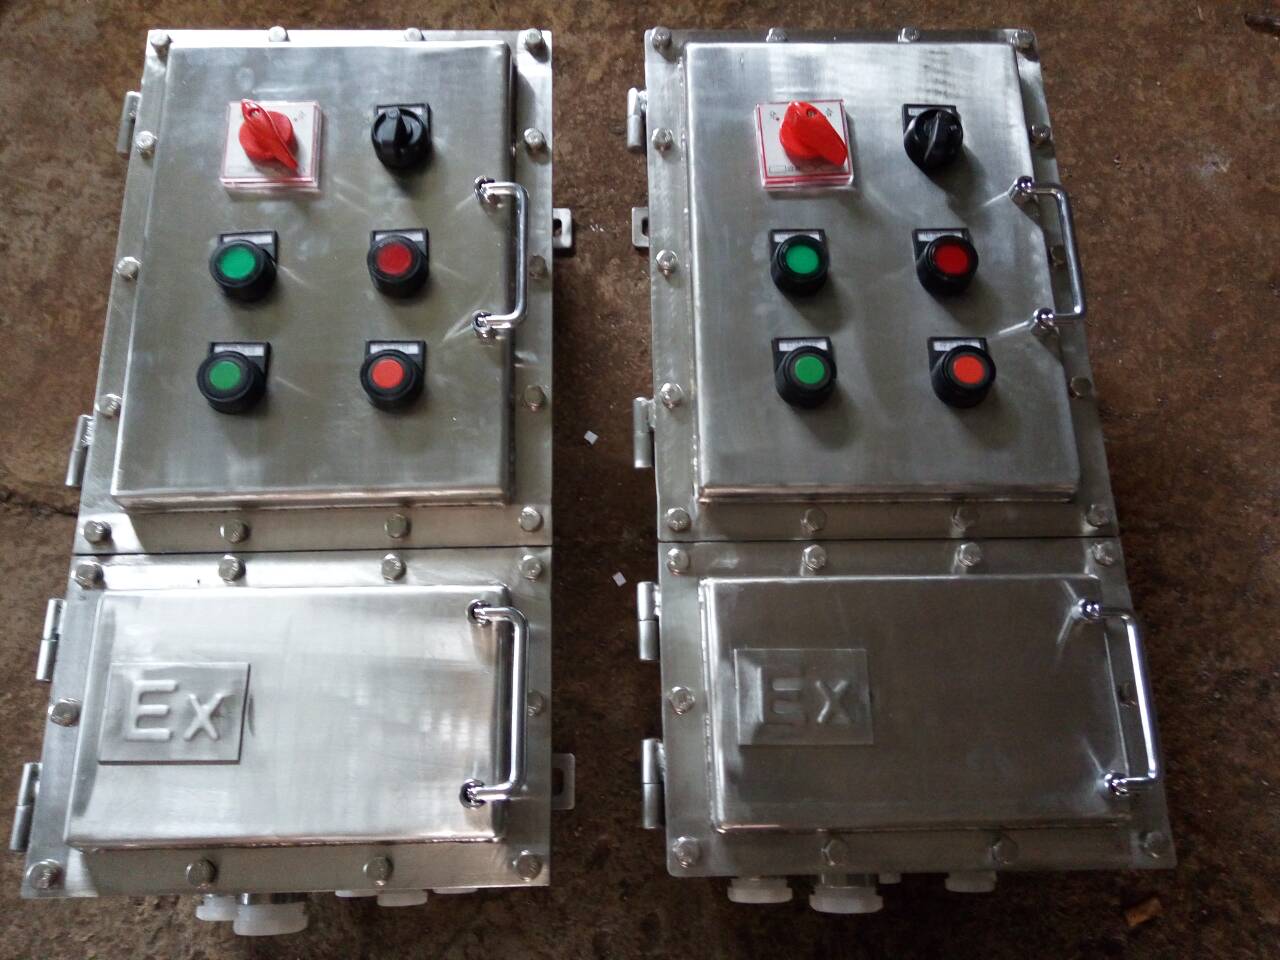 BJX防爆接线箱厂家直销|防爆接线箱适用范围|防爆接线箱价格|防爆接线箱产品特点